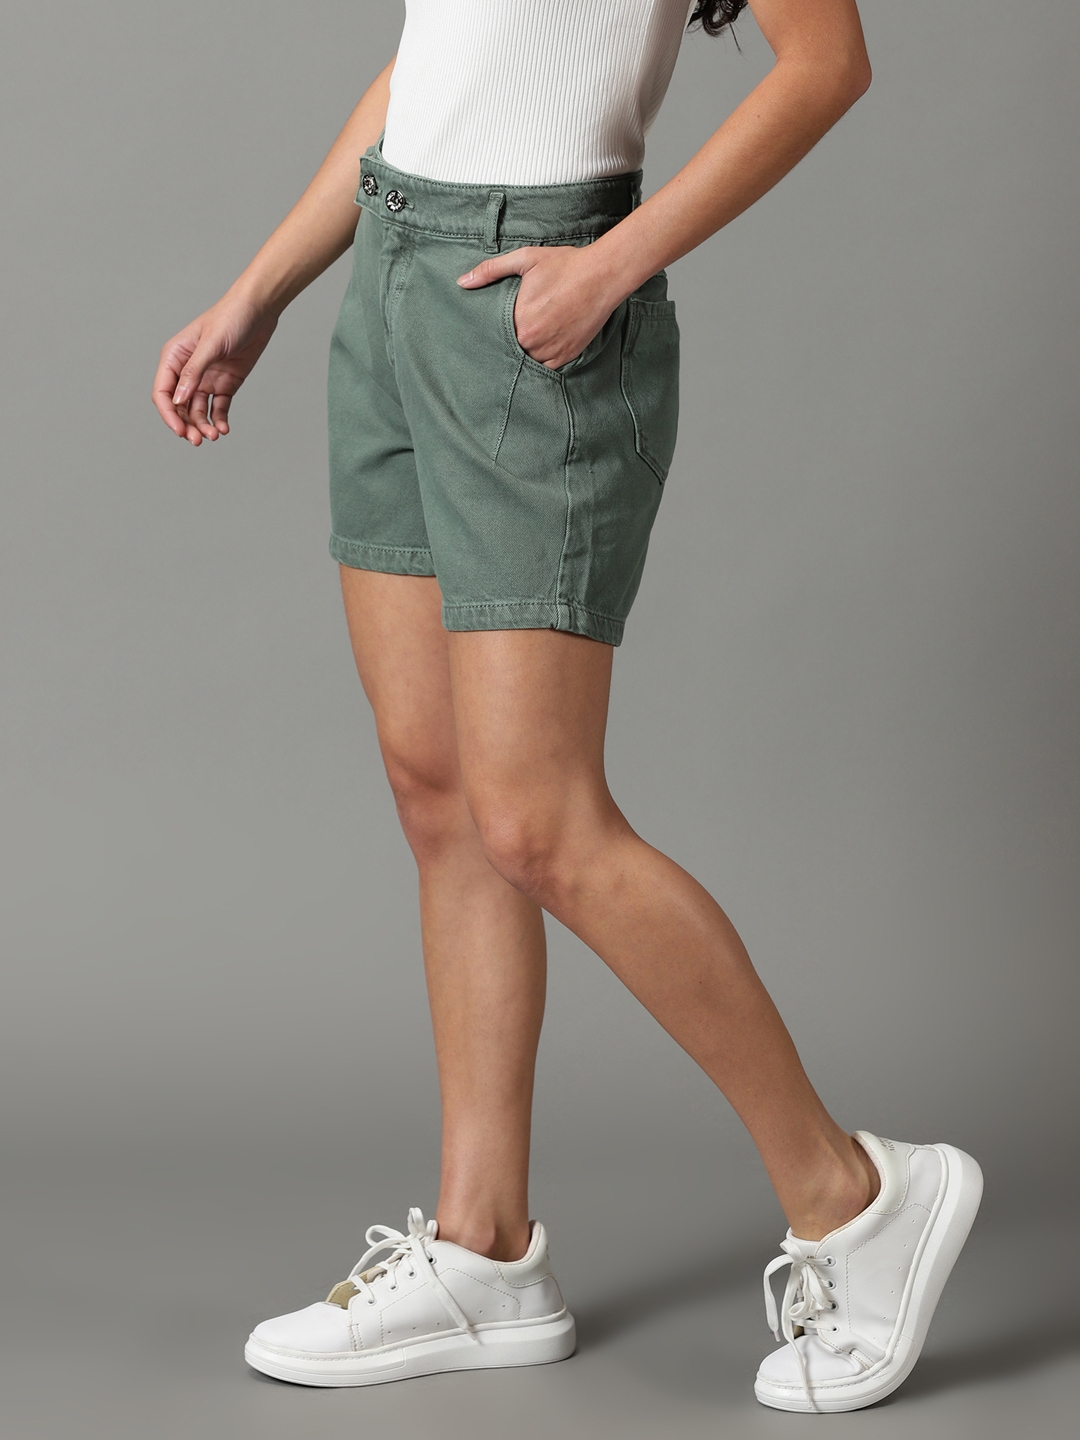 Showoff | SHOWOFF Women's Regular Fit Above Knee Solid Green Shorts 2